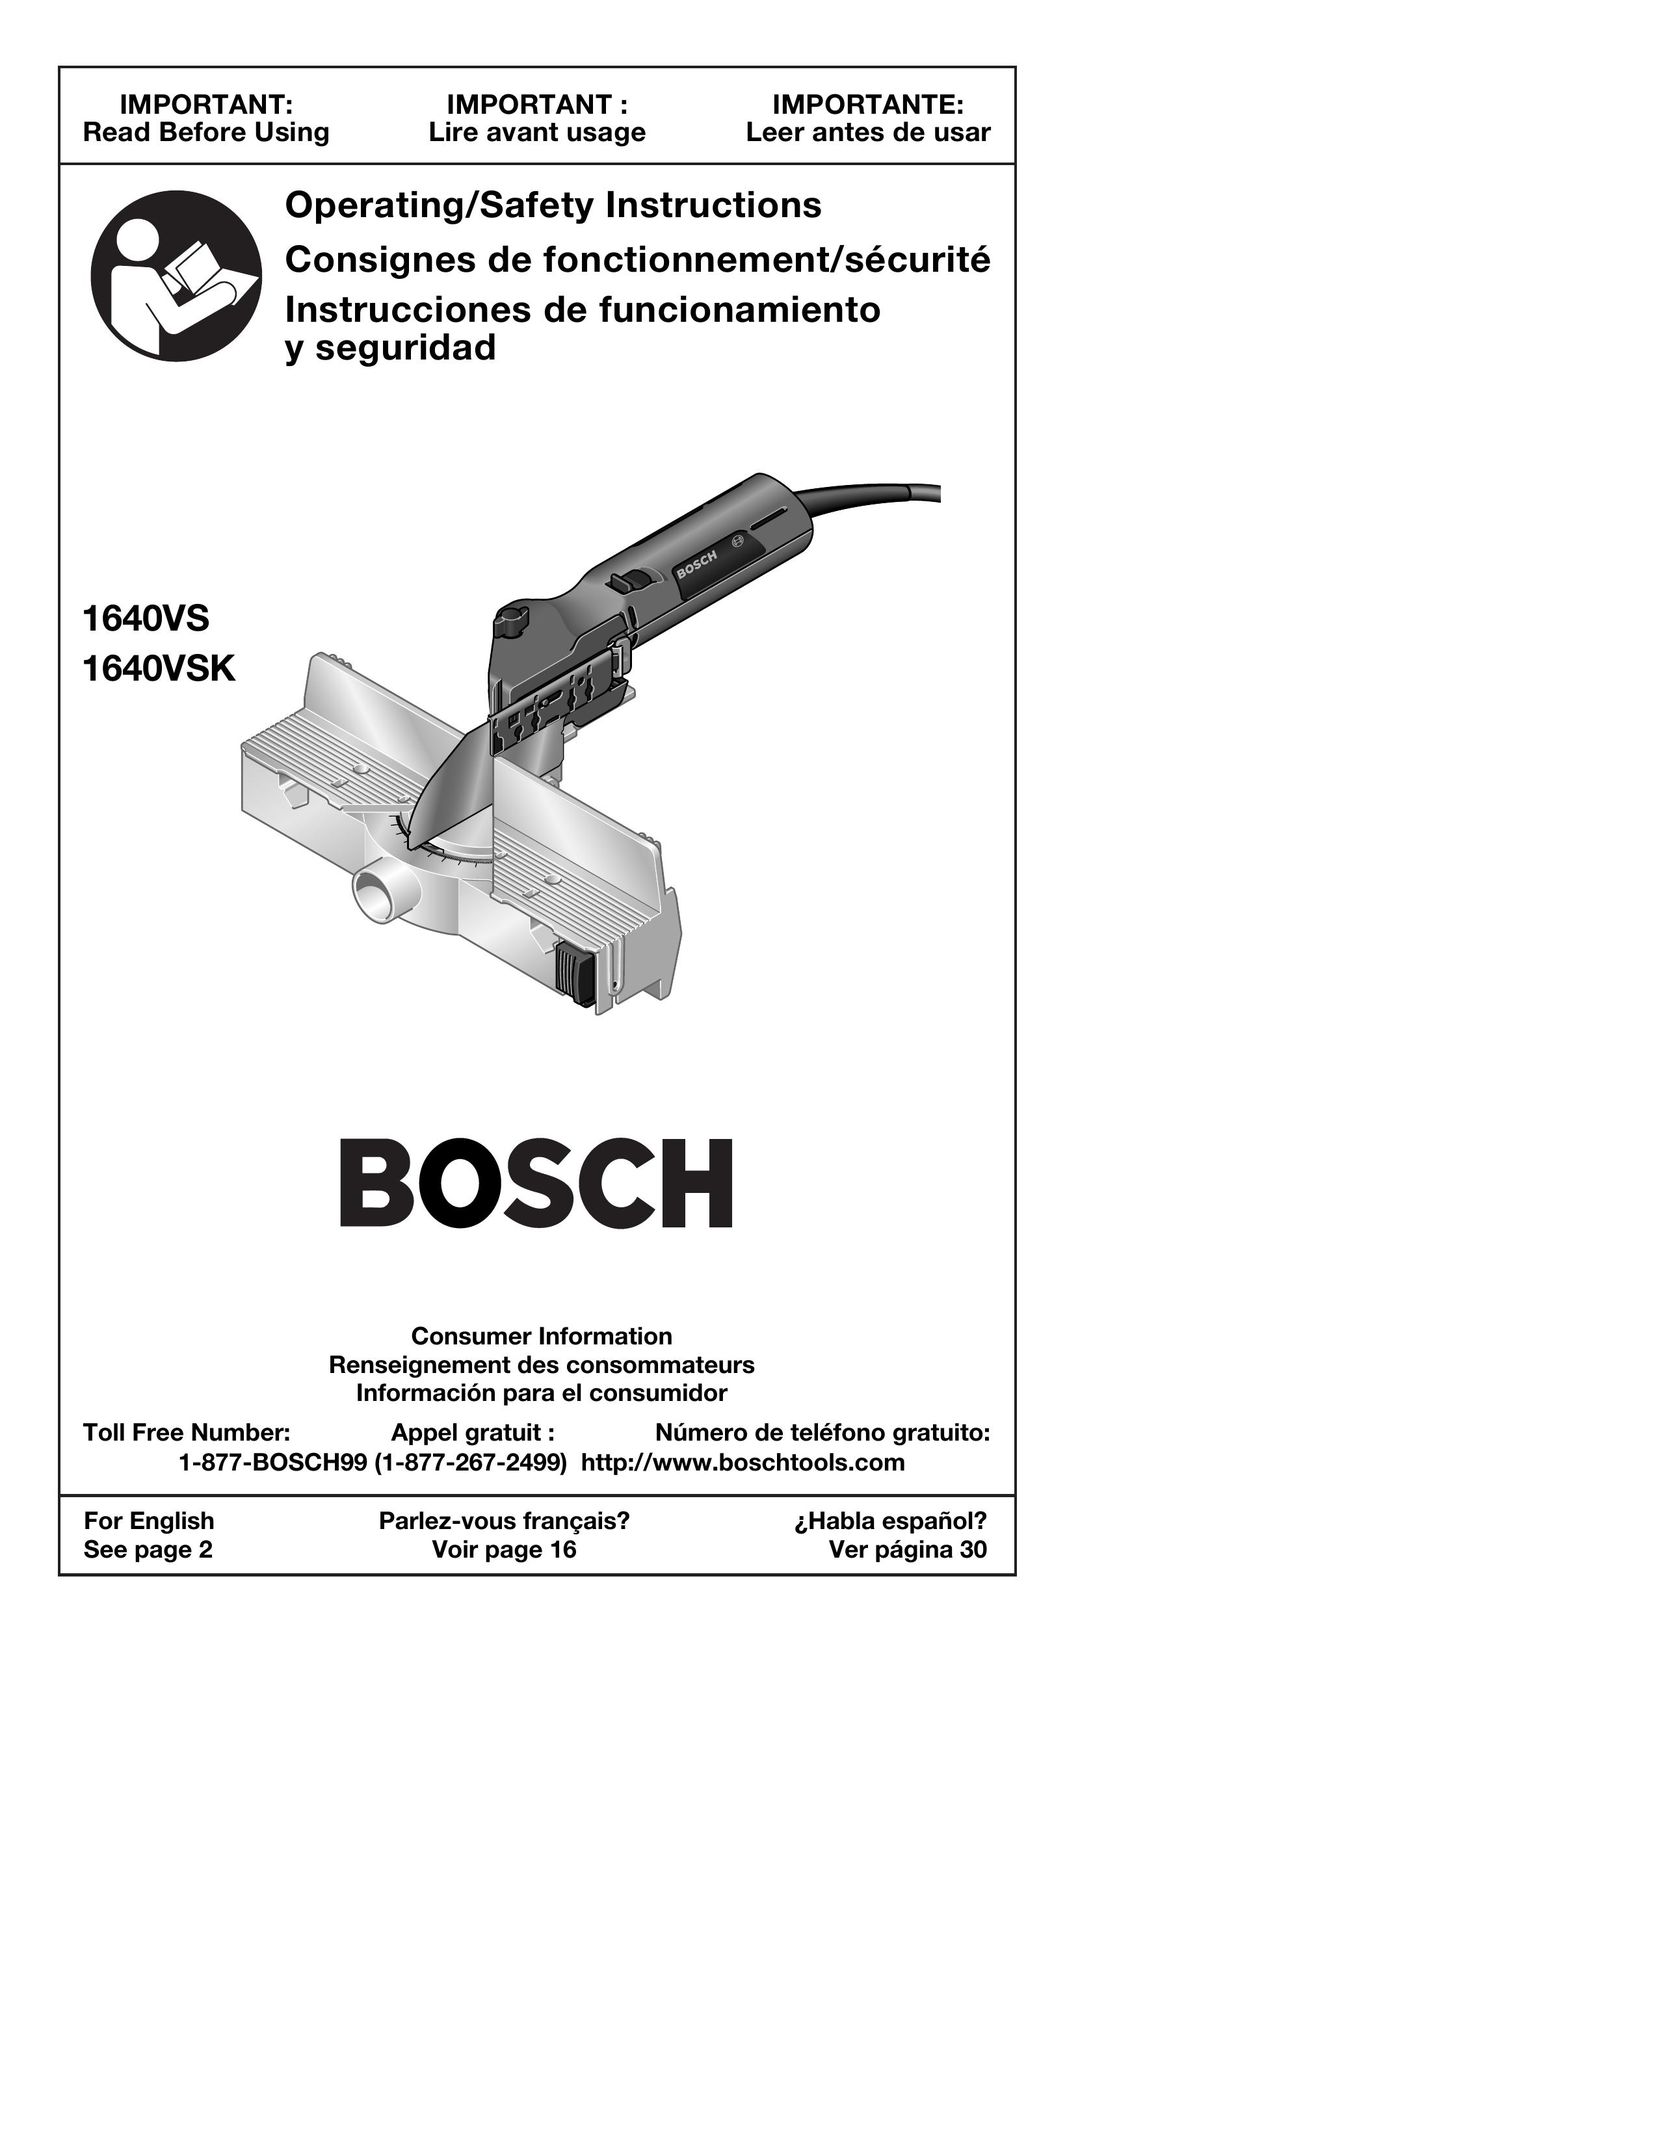 Bosch Power Tools 1640VS Saw User Manual